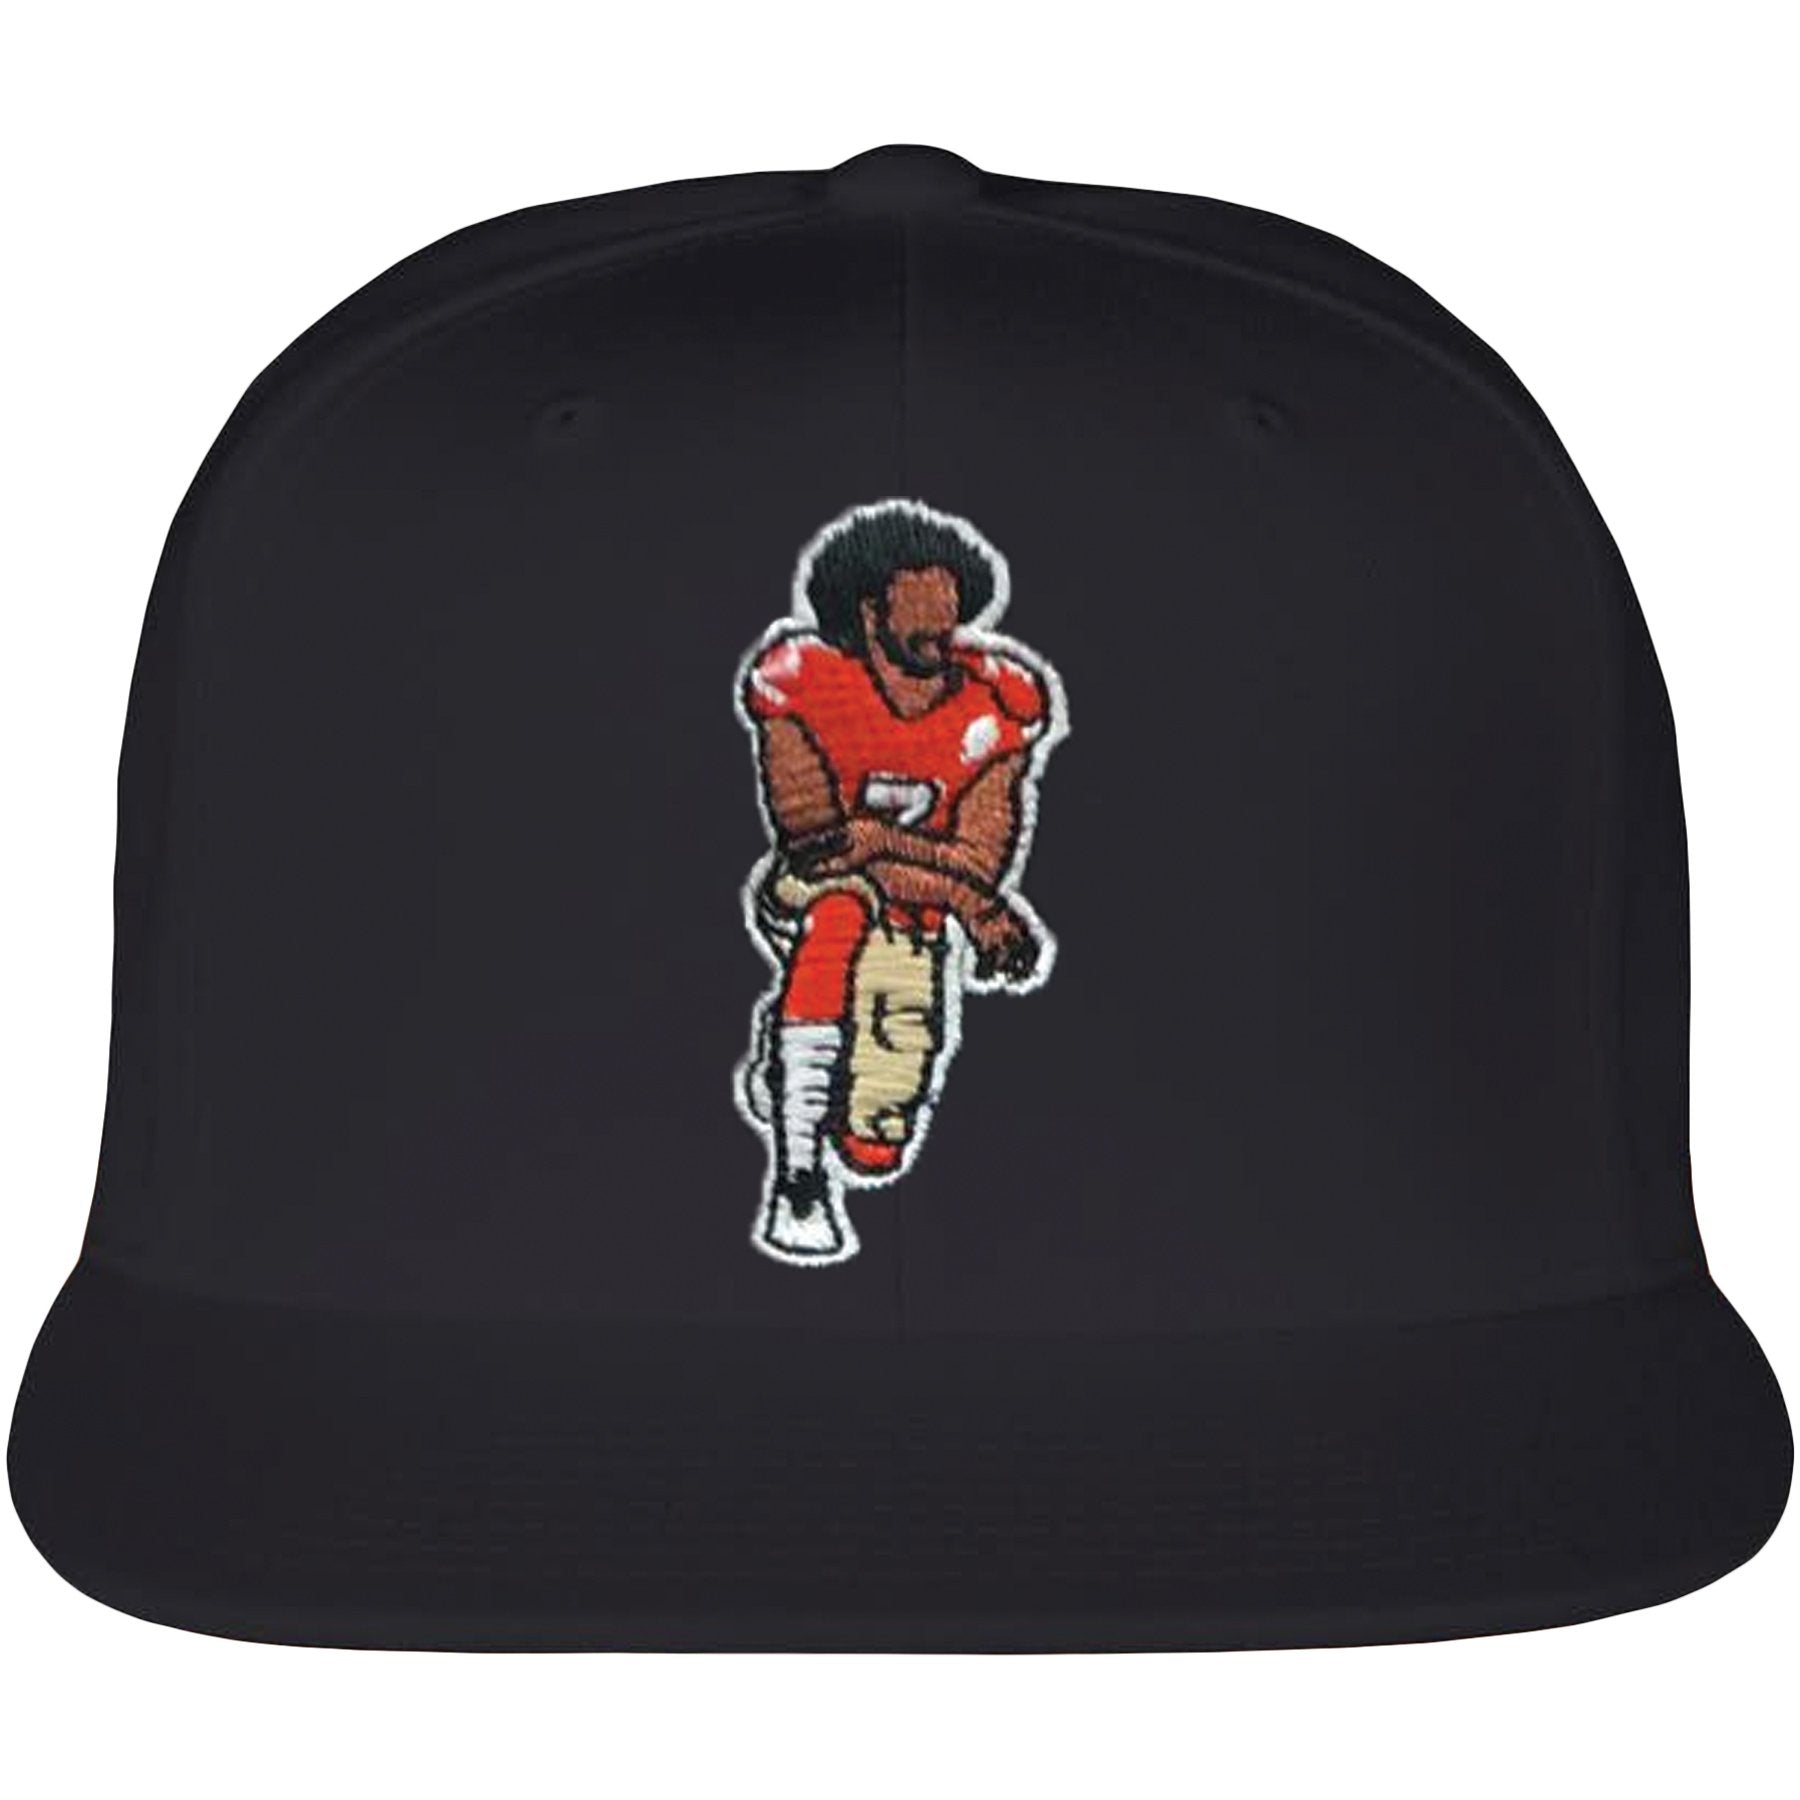 Embroidered on the front of the Colin Kaepernick black snapback hat is the Kaepernick kneeling logo